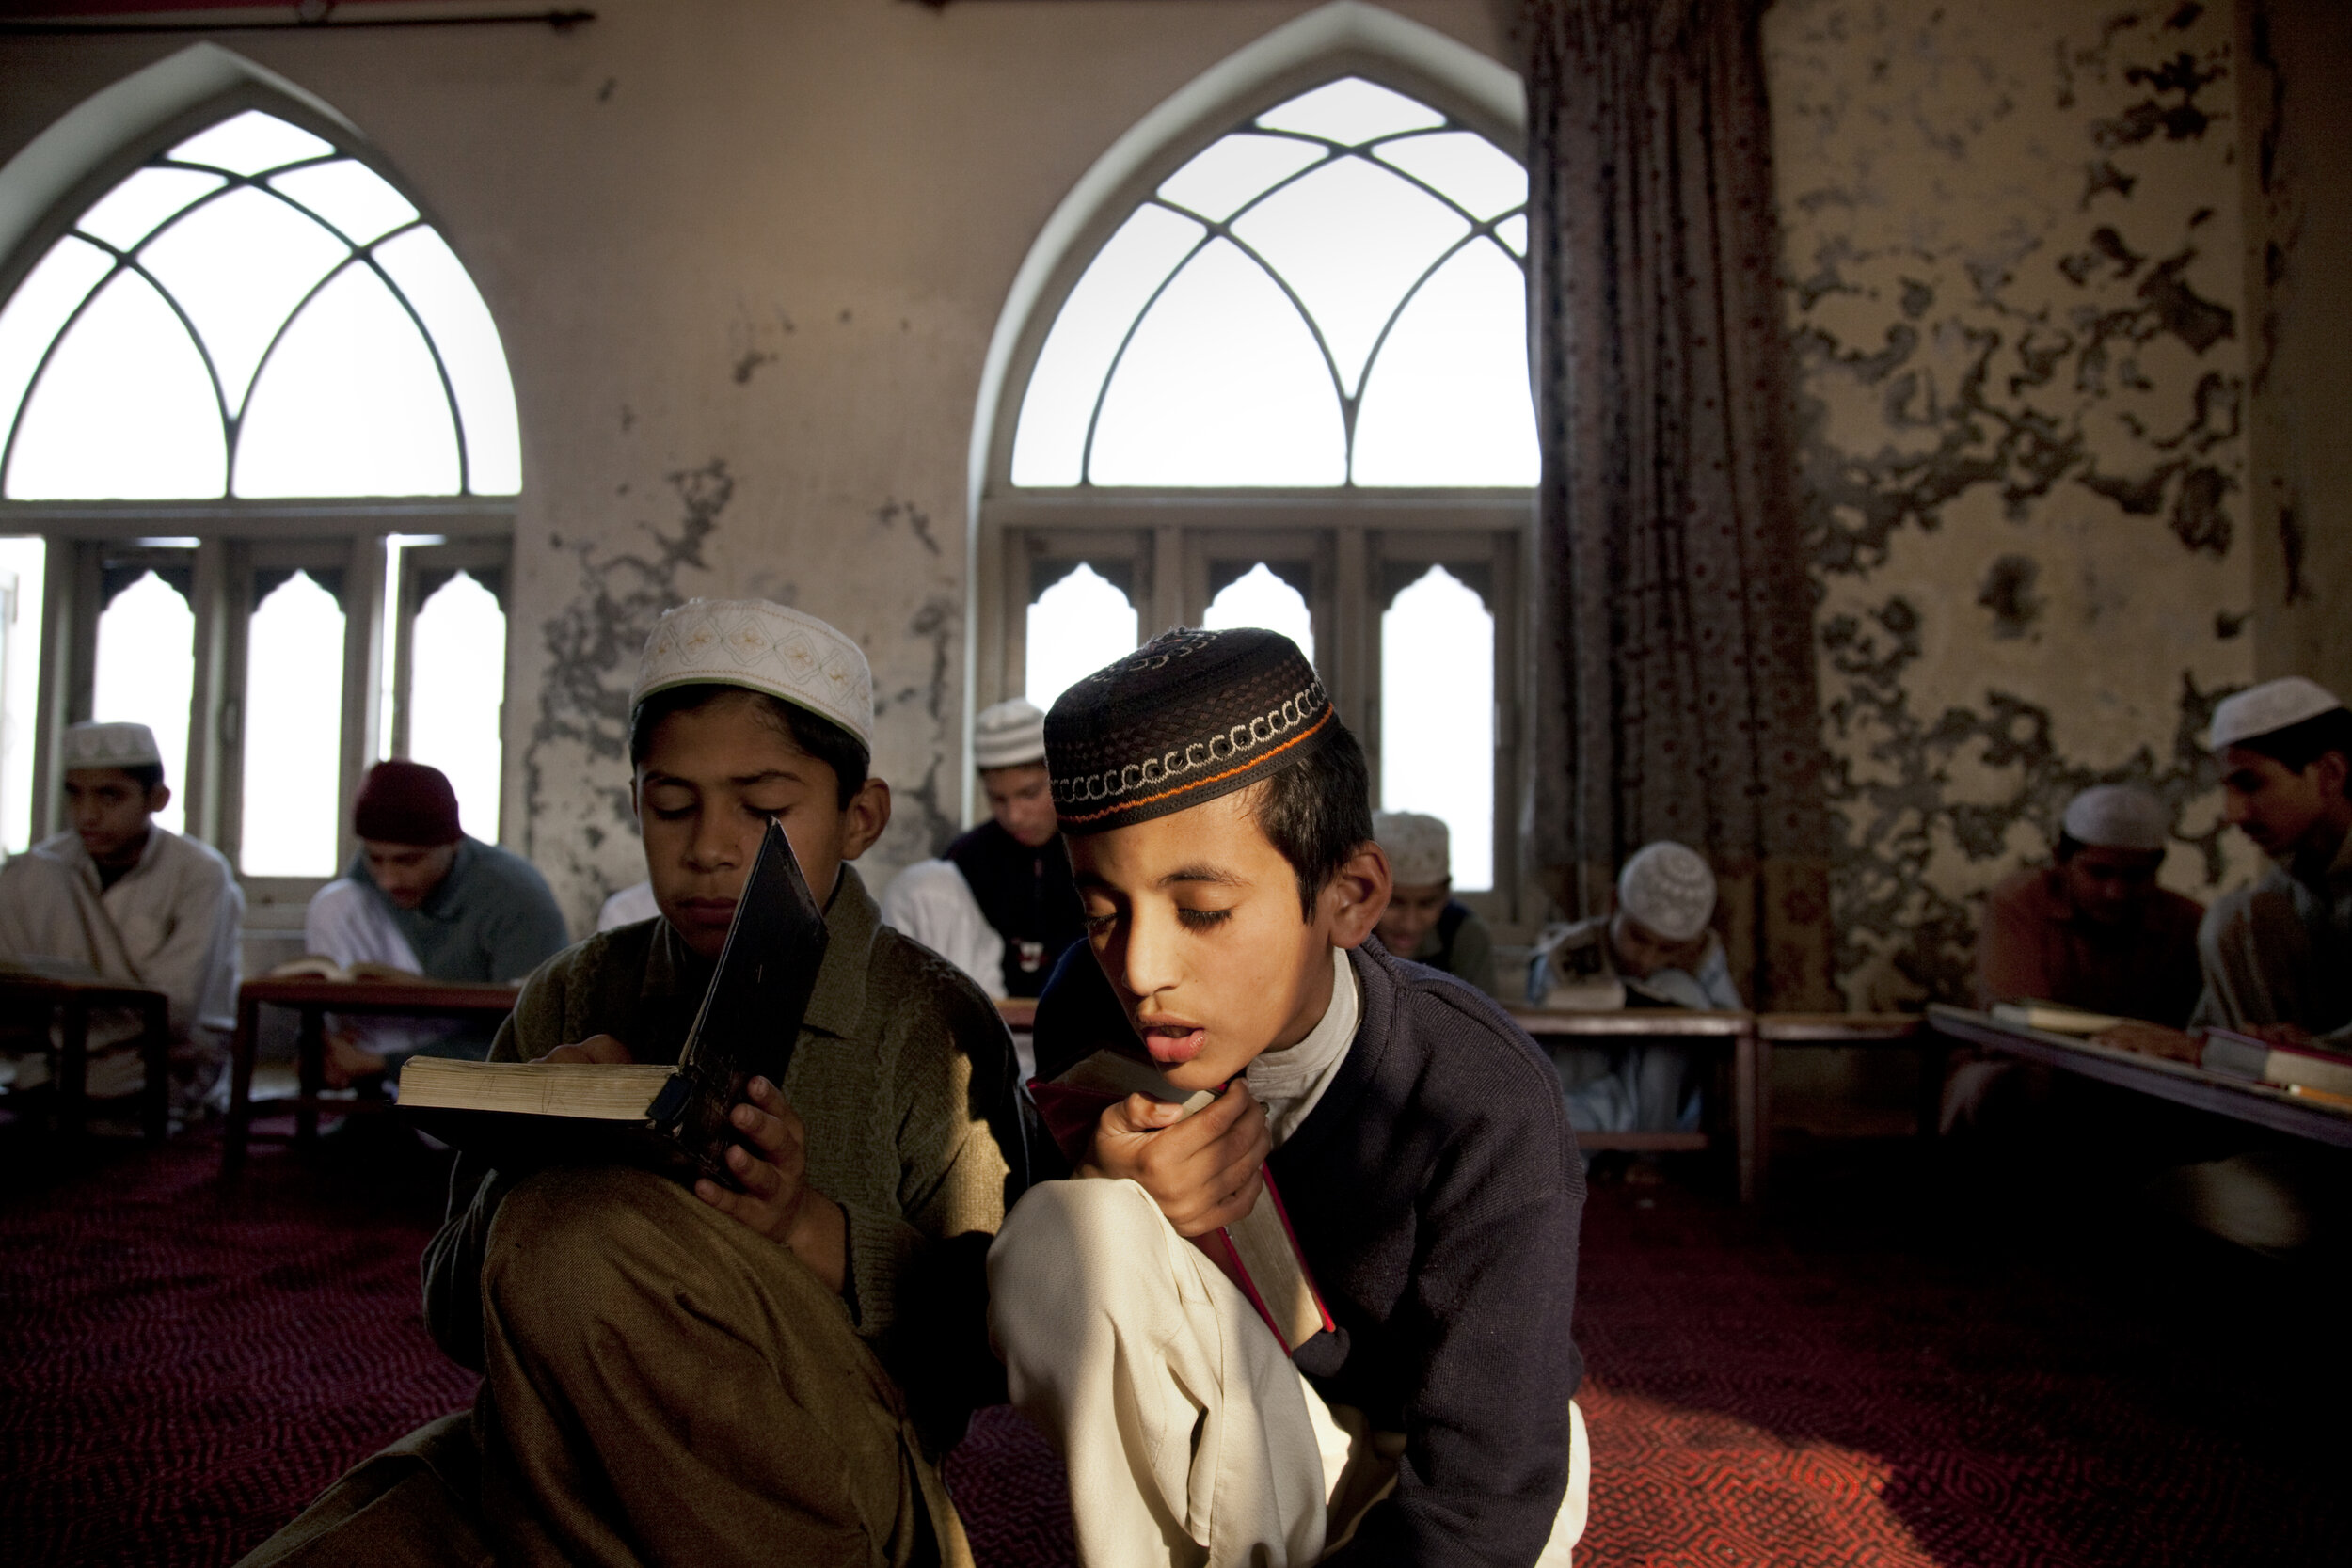  Young men study the Qu'ran at the Jamia Arabia Madrassa in Gujranwala. Pakistan. 2009  